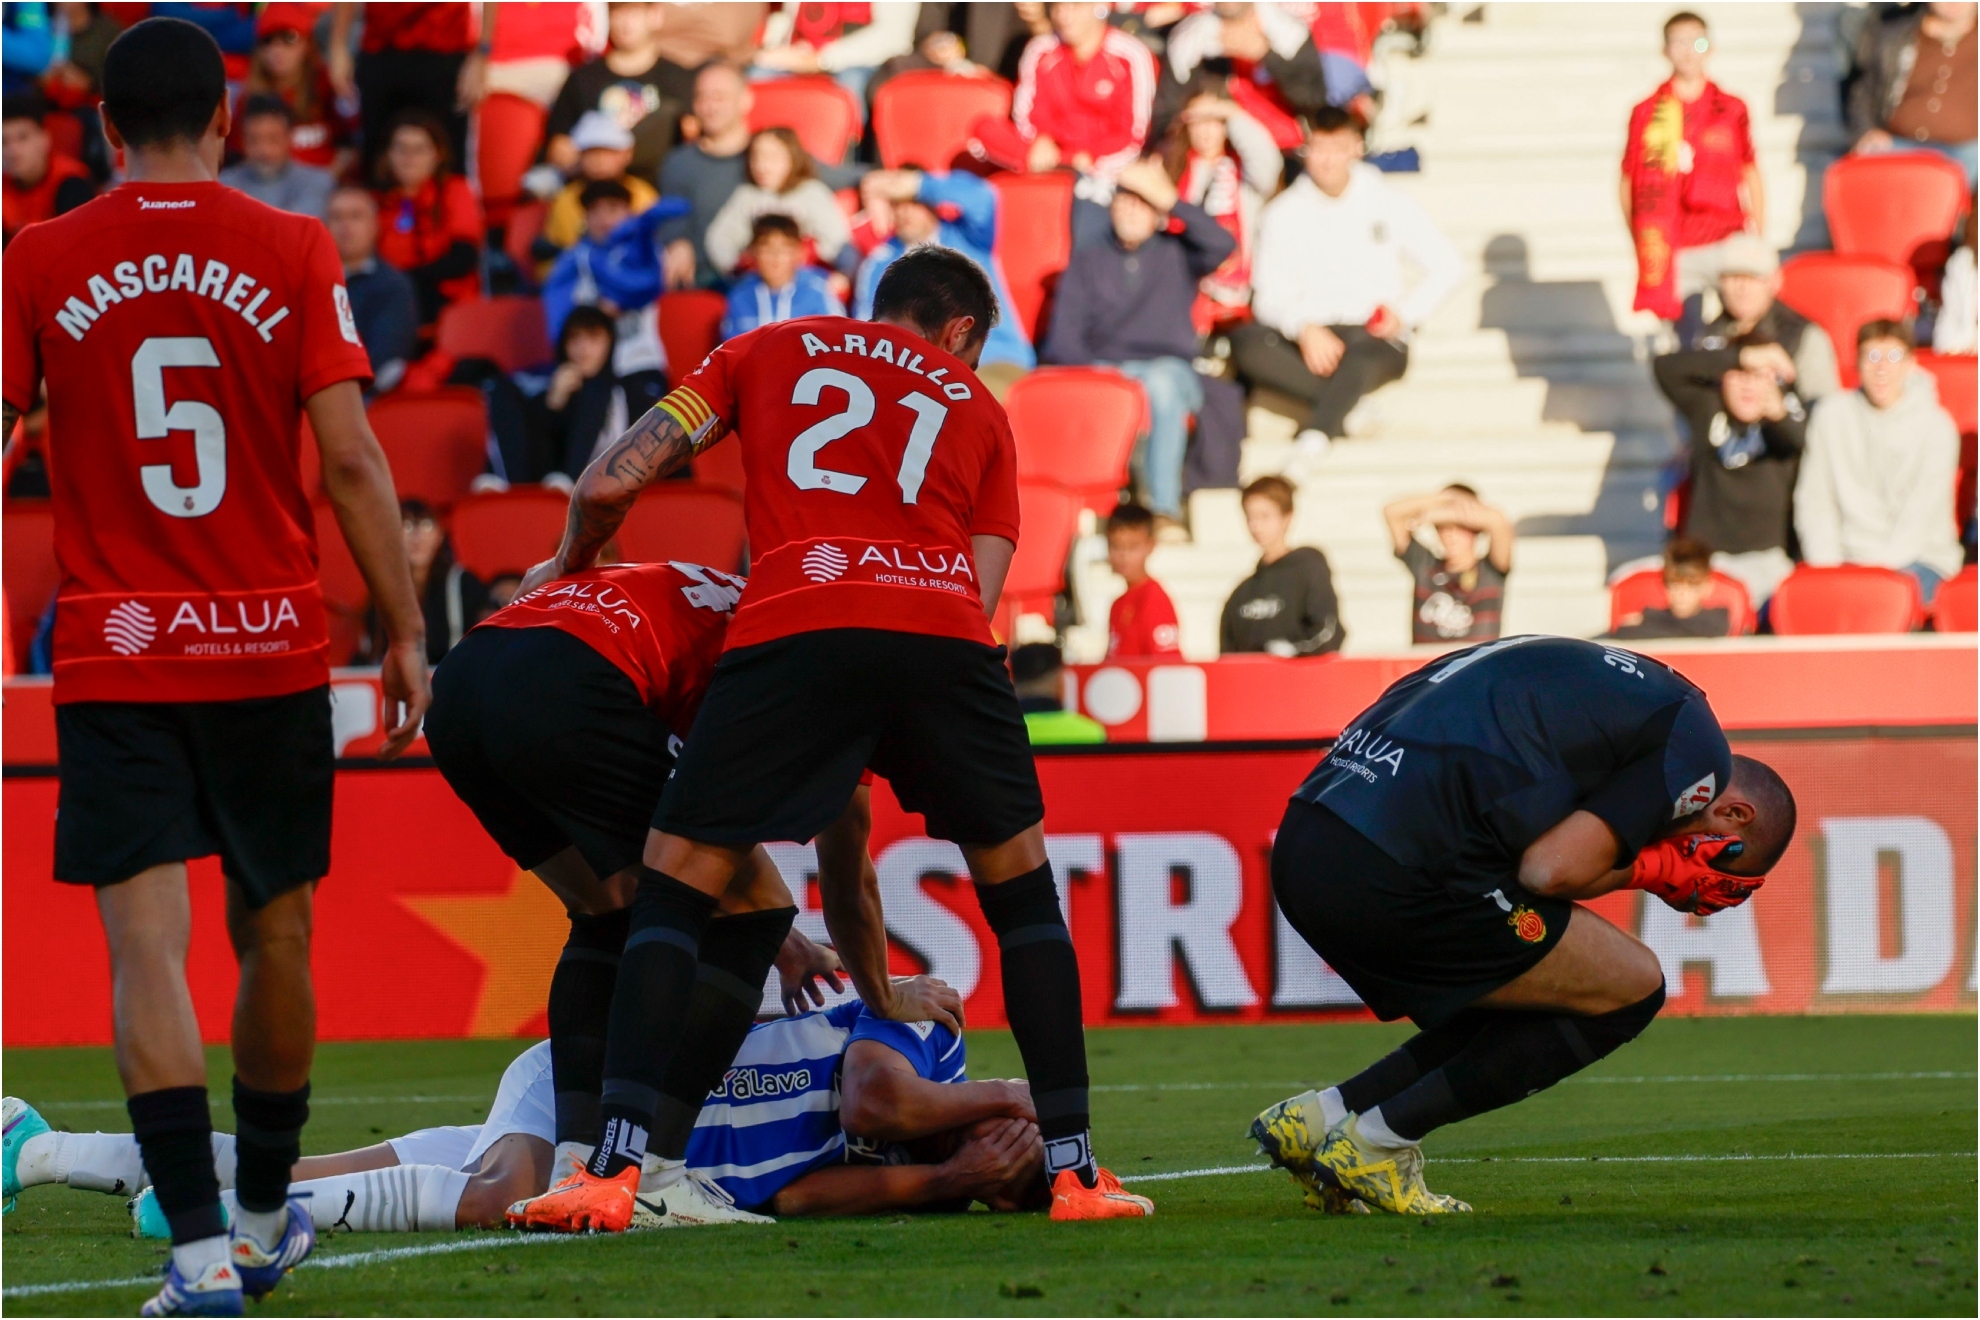 l guardameta serbio del Mallorca, Predrag Rajkovic,se duele tras chocar con un jugador del Alavés.